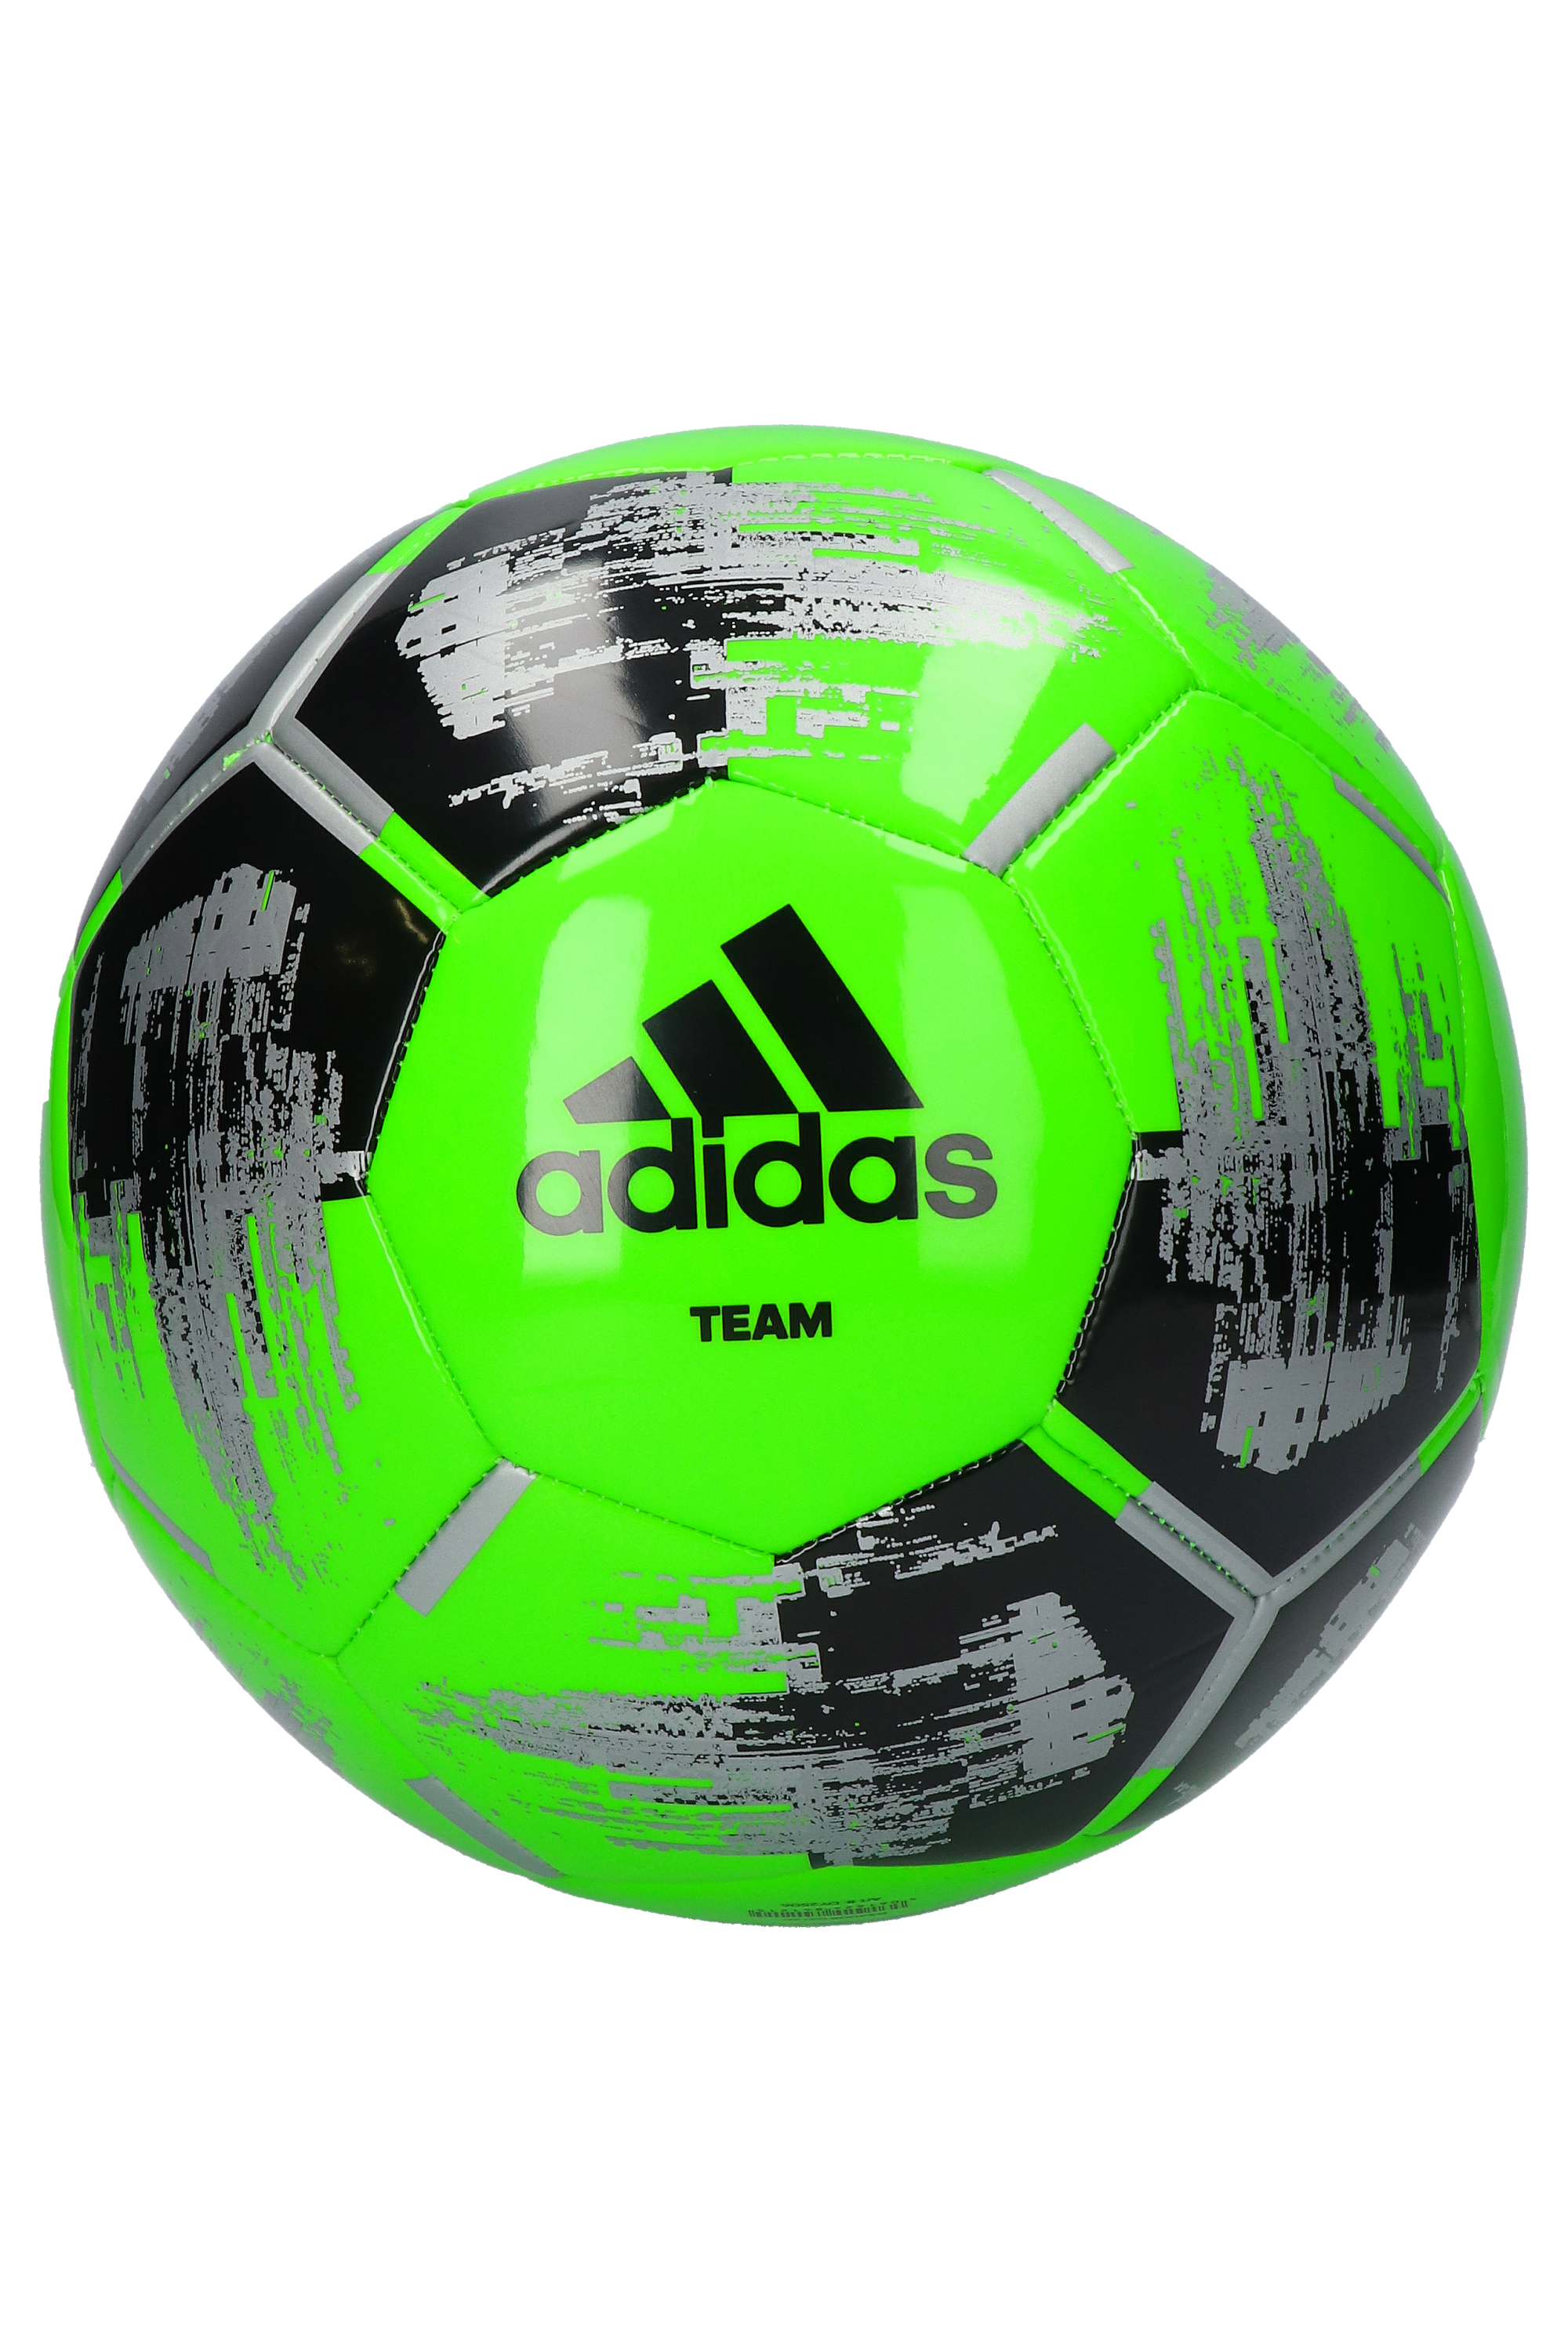 Vigilante jurado El actual Ball adidas Team size 4 | R-GOL.com - Football boots & equipment